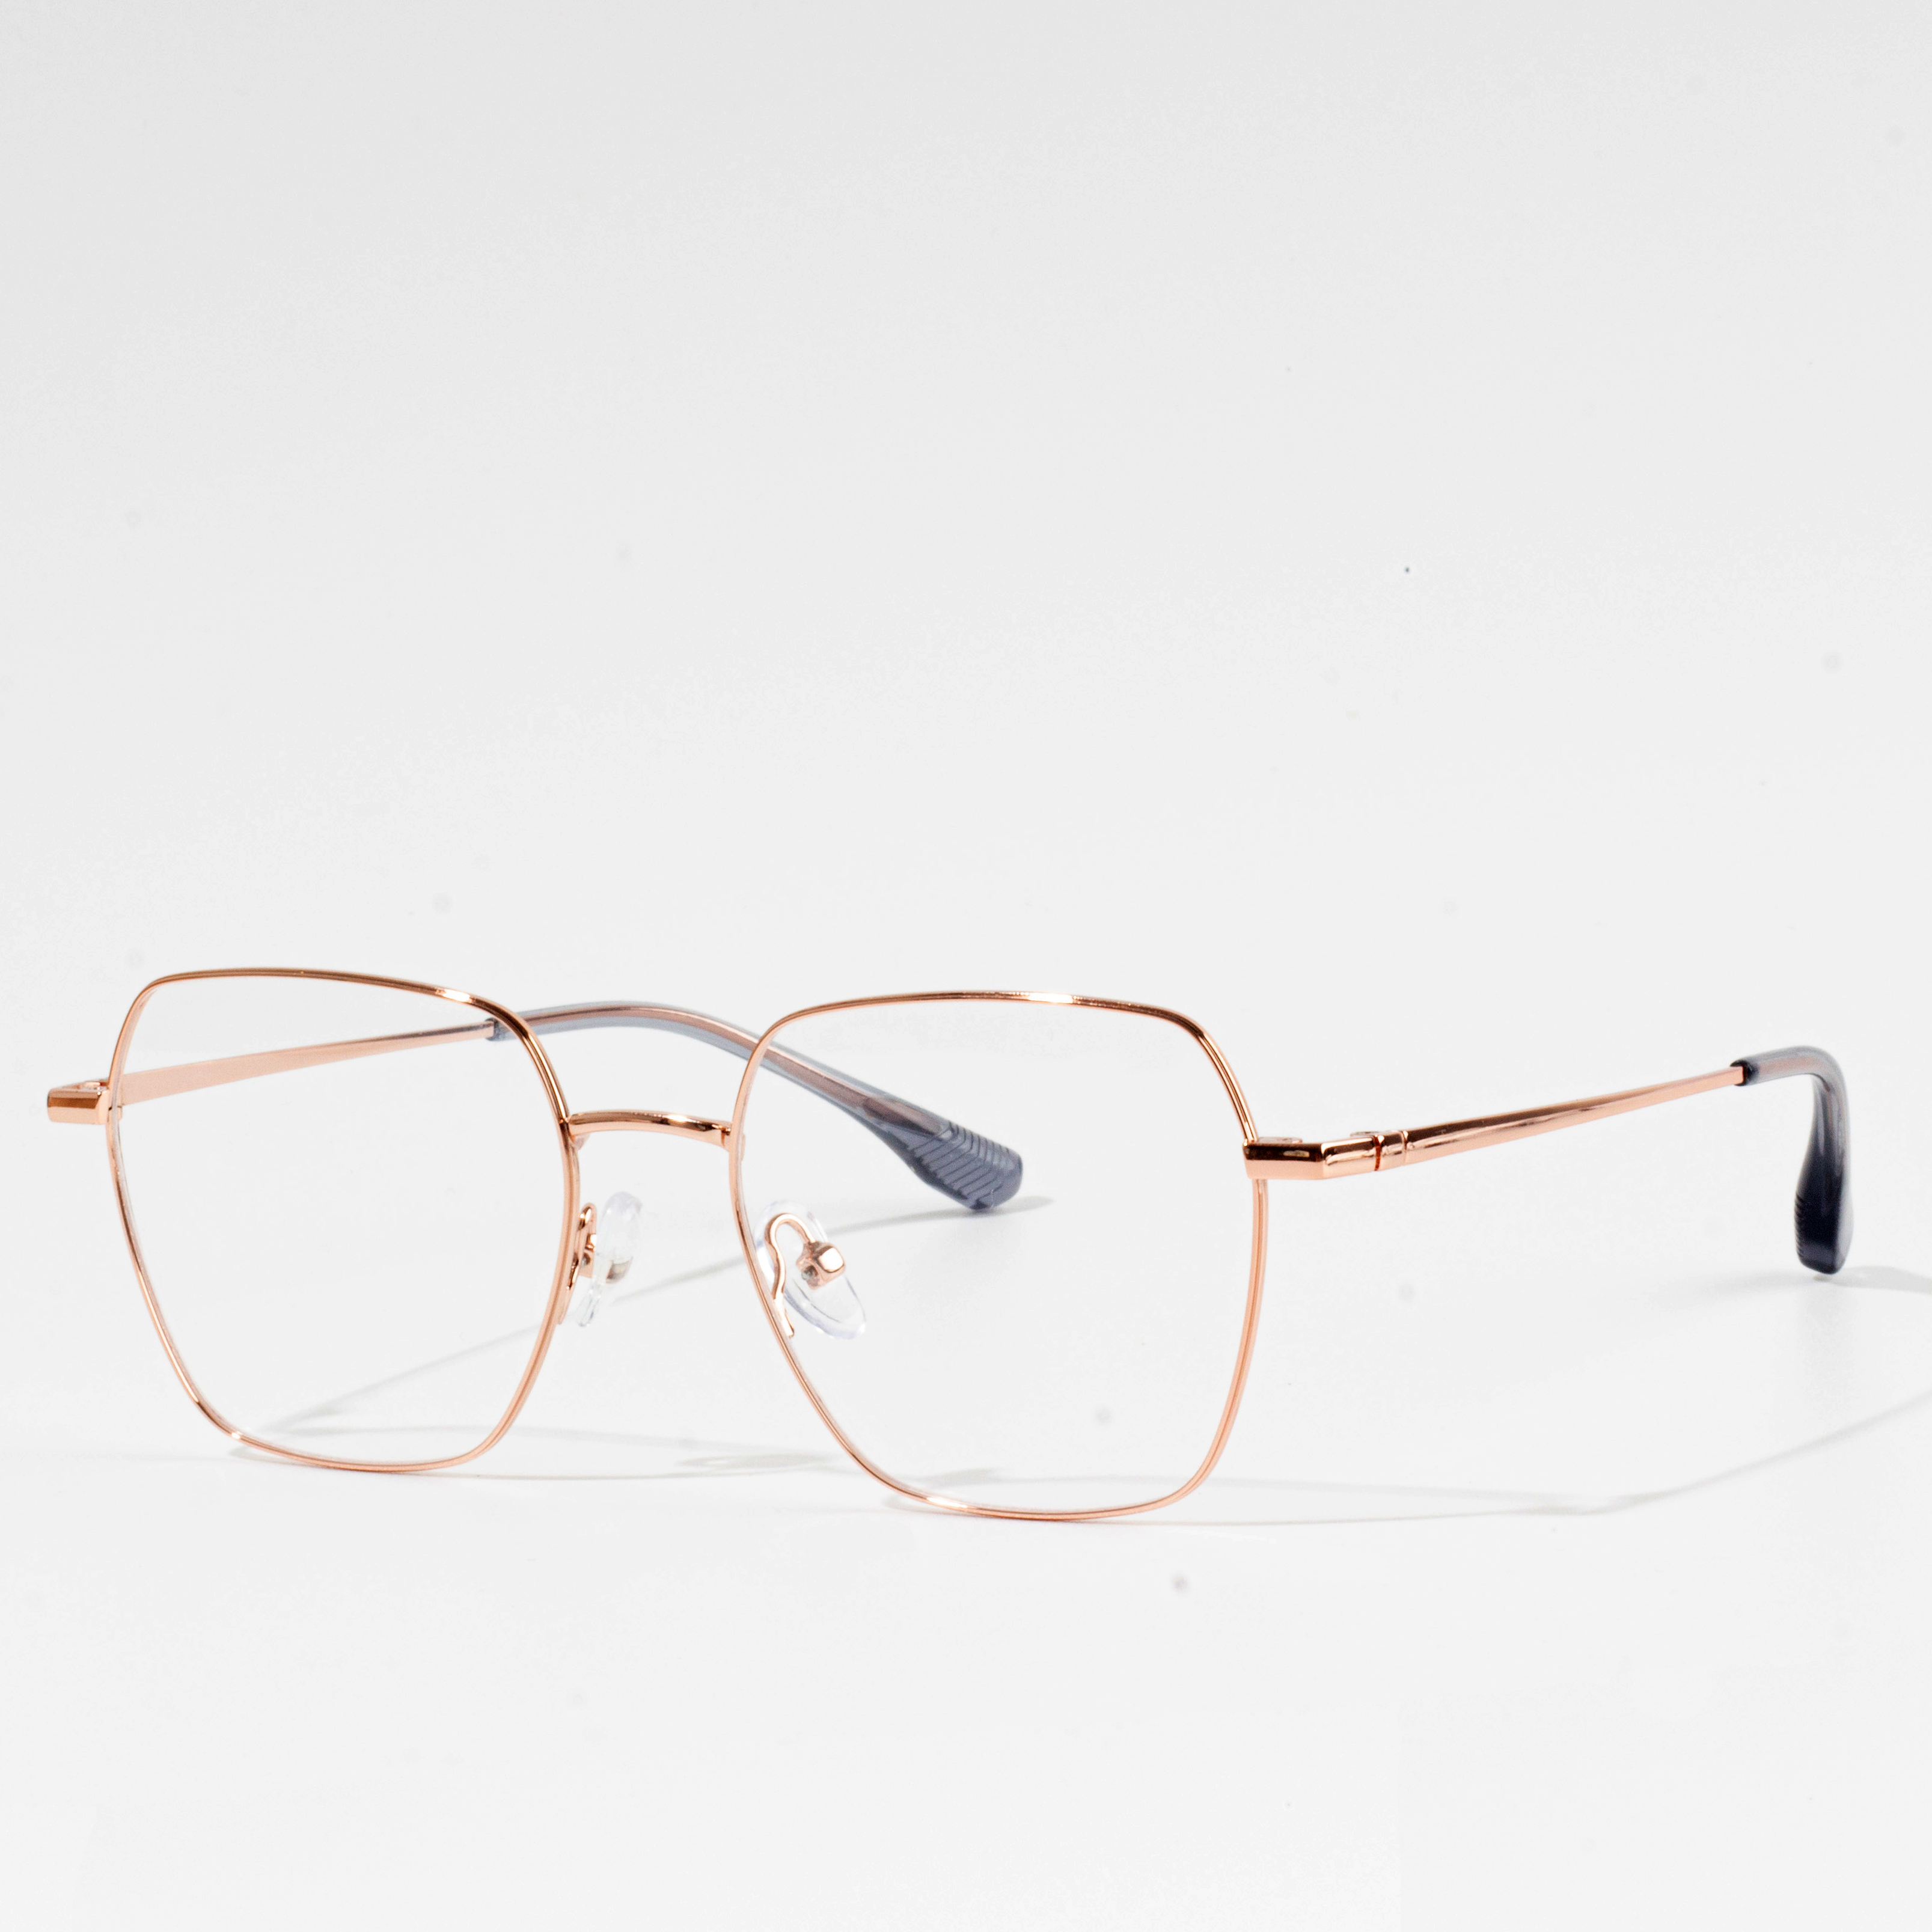 thin & lightweight metal eyeglasses